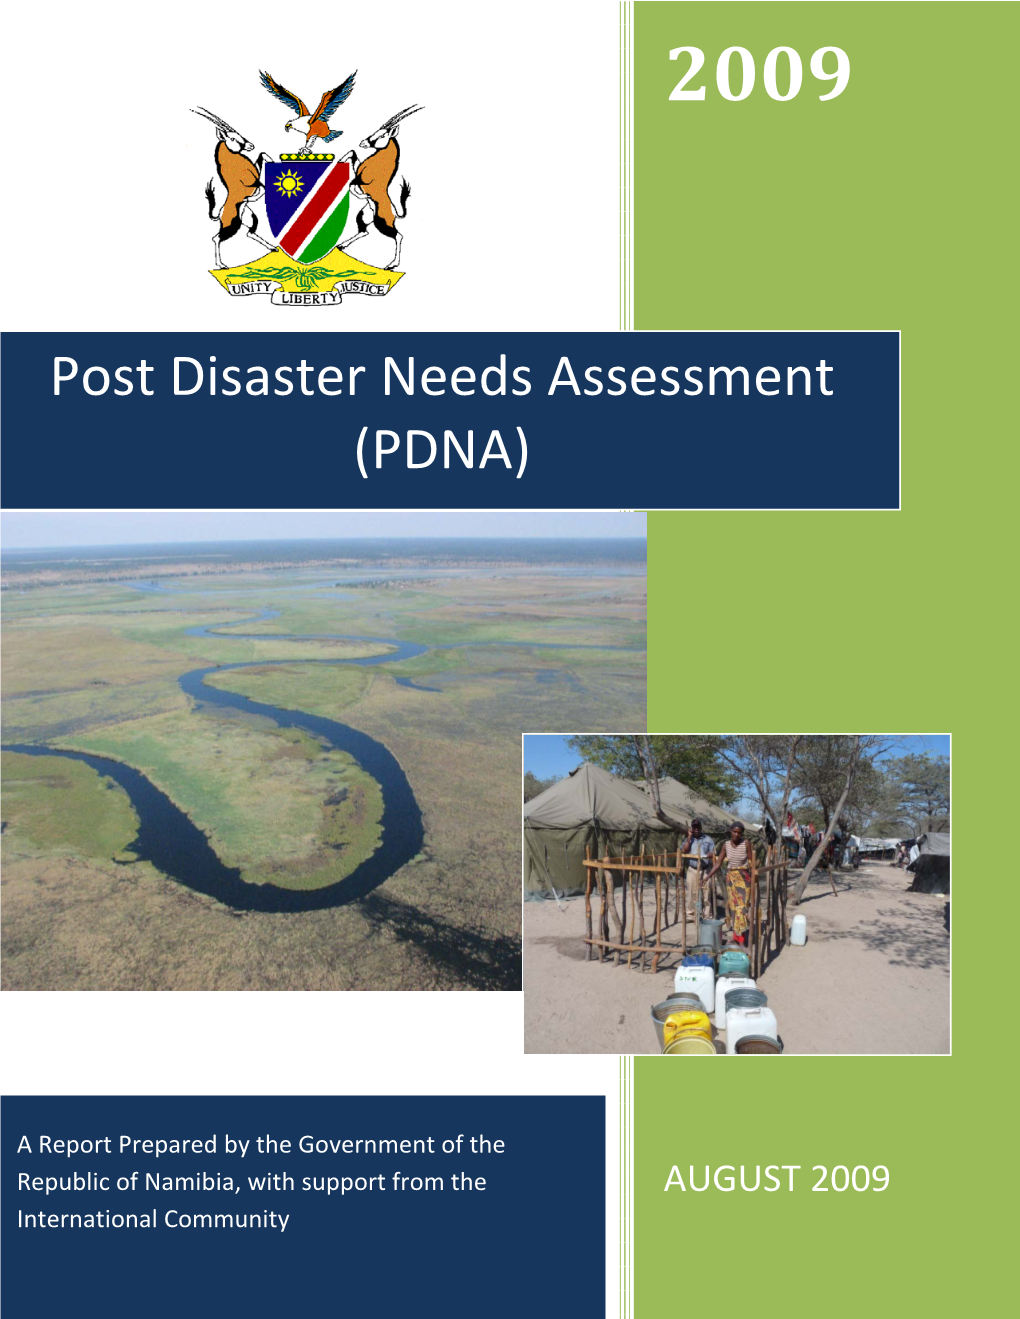 Namibia Floods Post Disaster Needs Assessment 2009